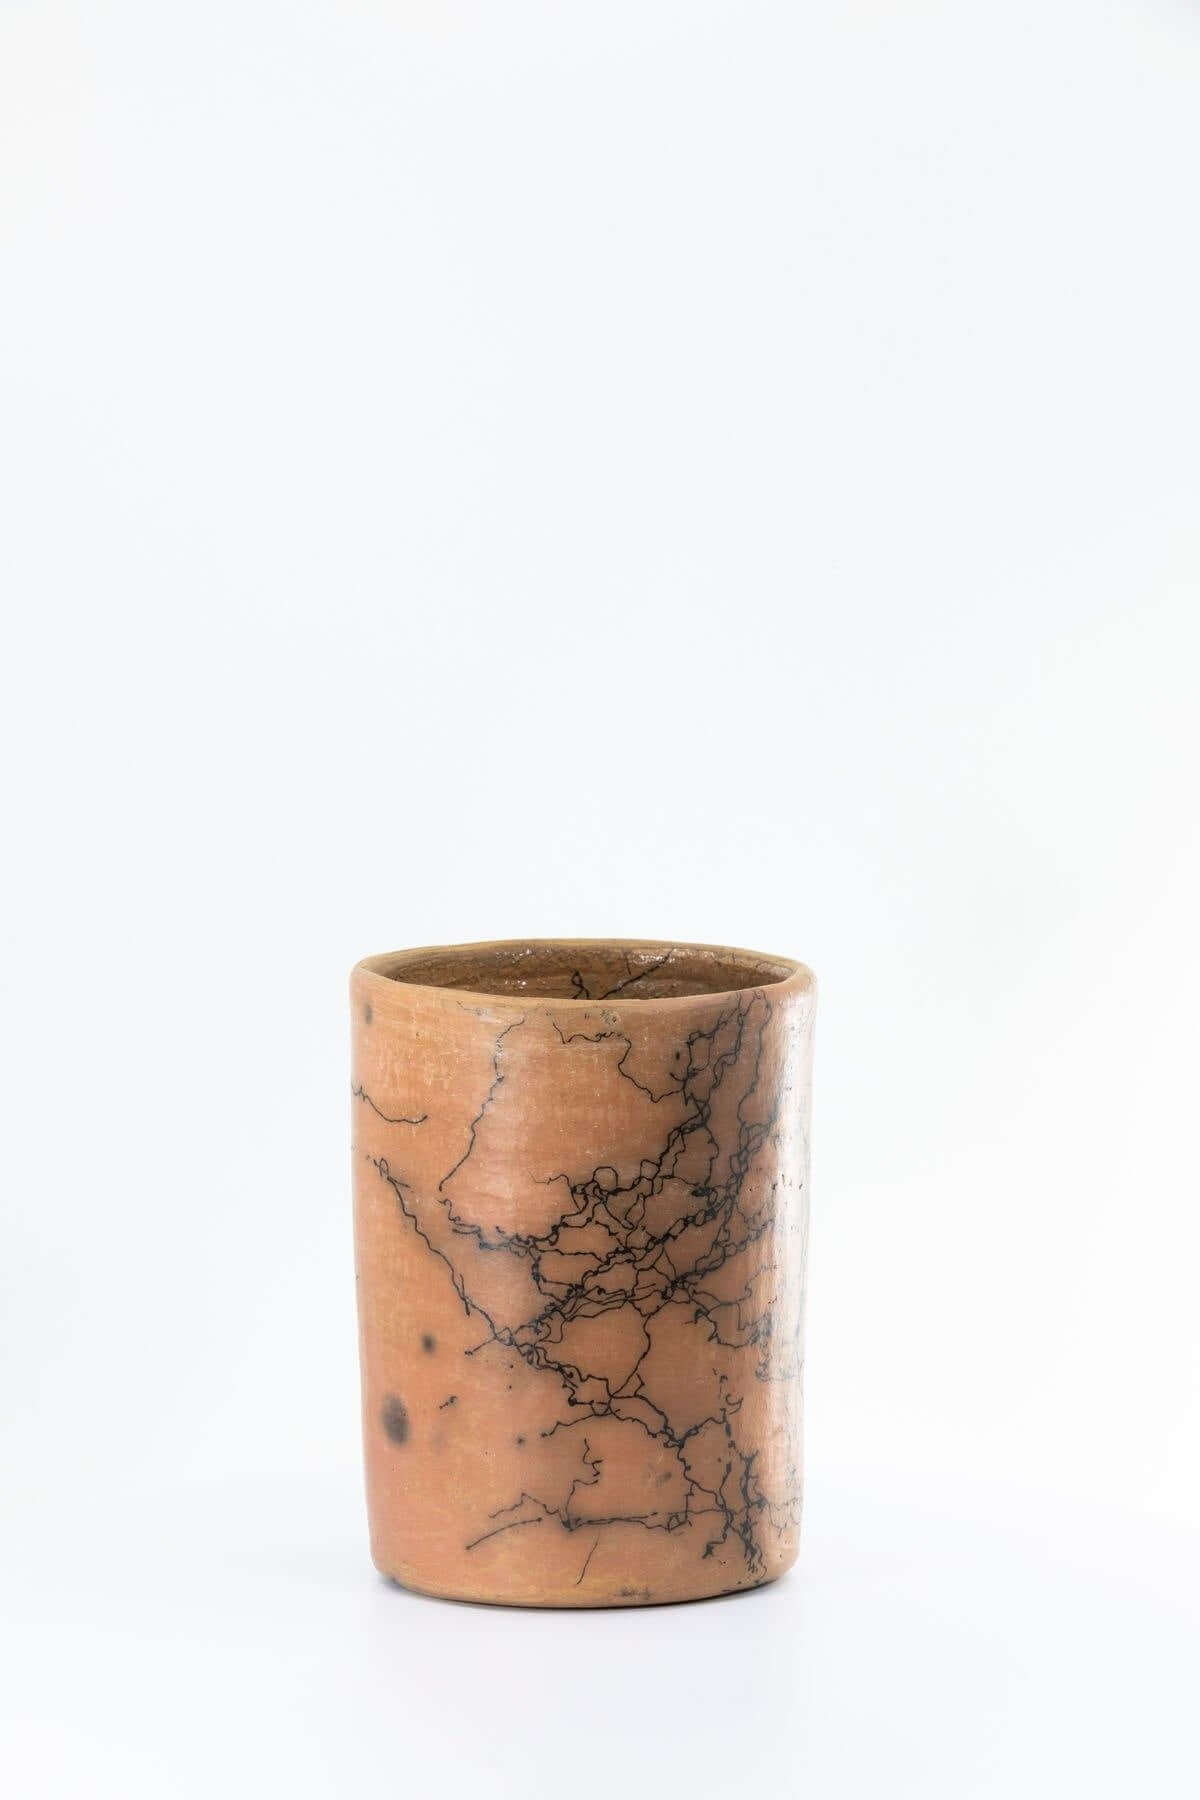 Rooted Handmade Ceramic Mug by Adrián Martínez Alarzón - Wool+Clay